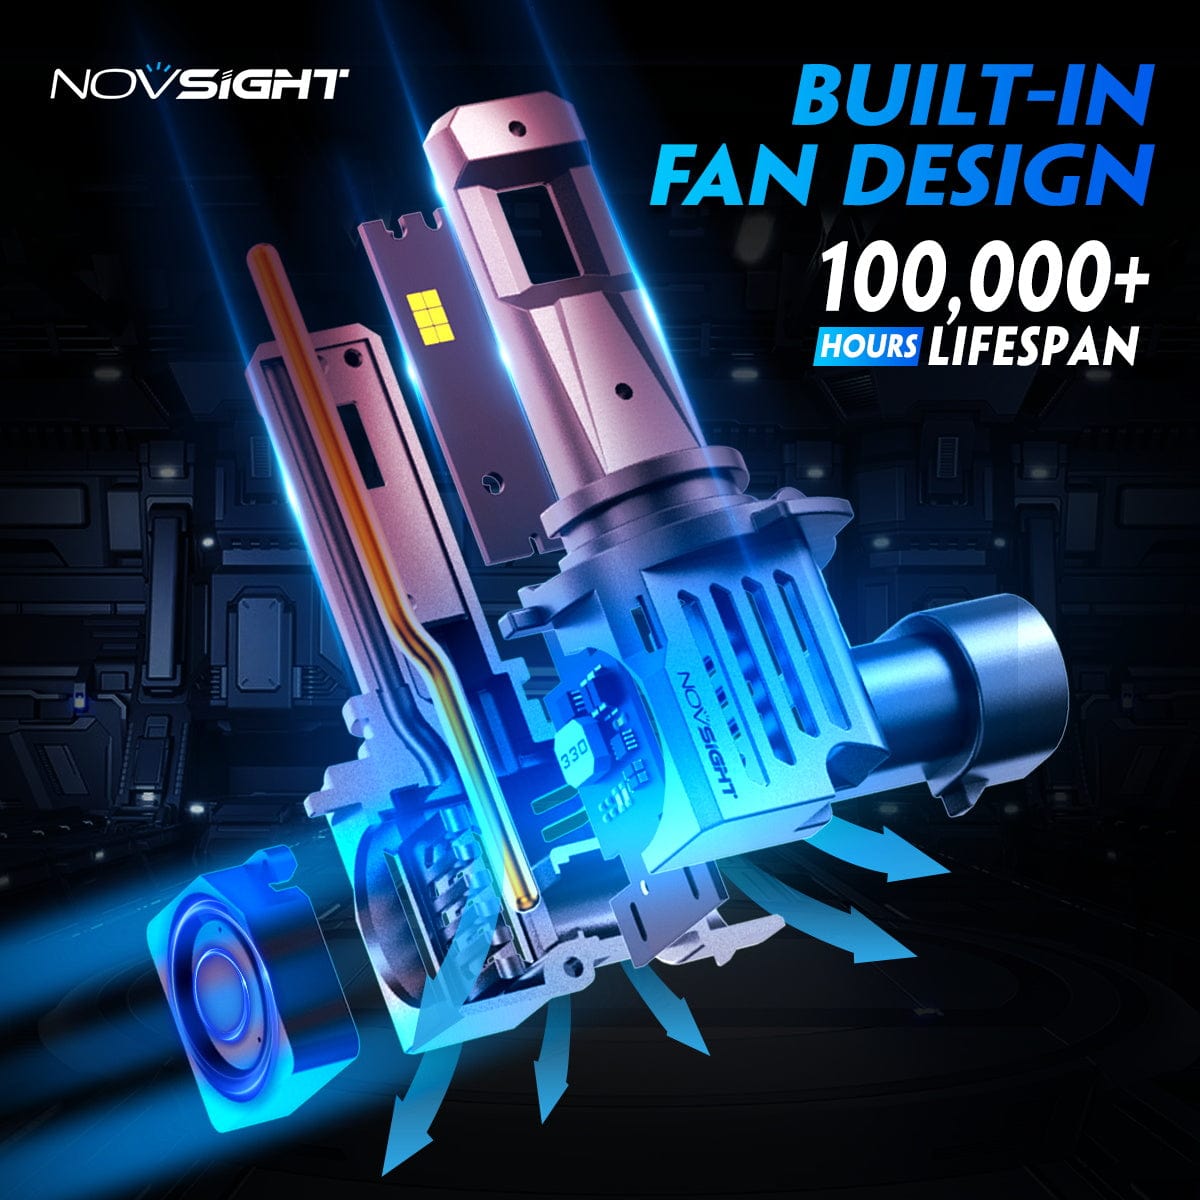 N66 Pro Series Wireless | 9005 HB3 LED Bulbs Perfect Beam 80W 18000LM 6500K White | 2 Bullbs - NOVSIGHT